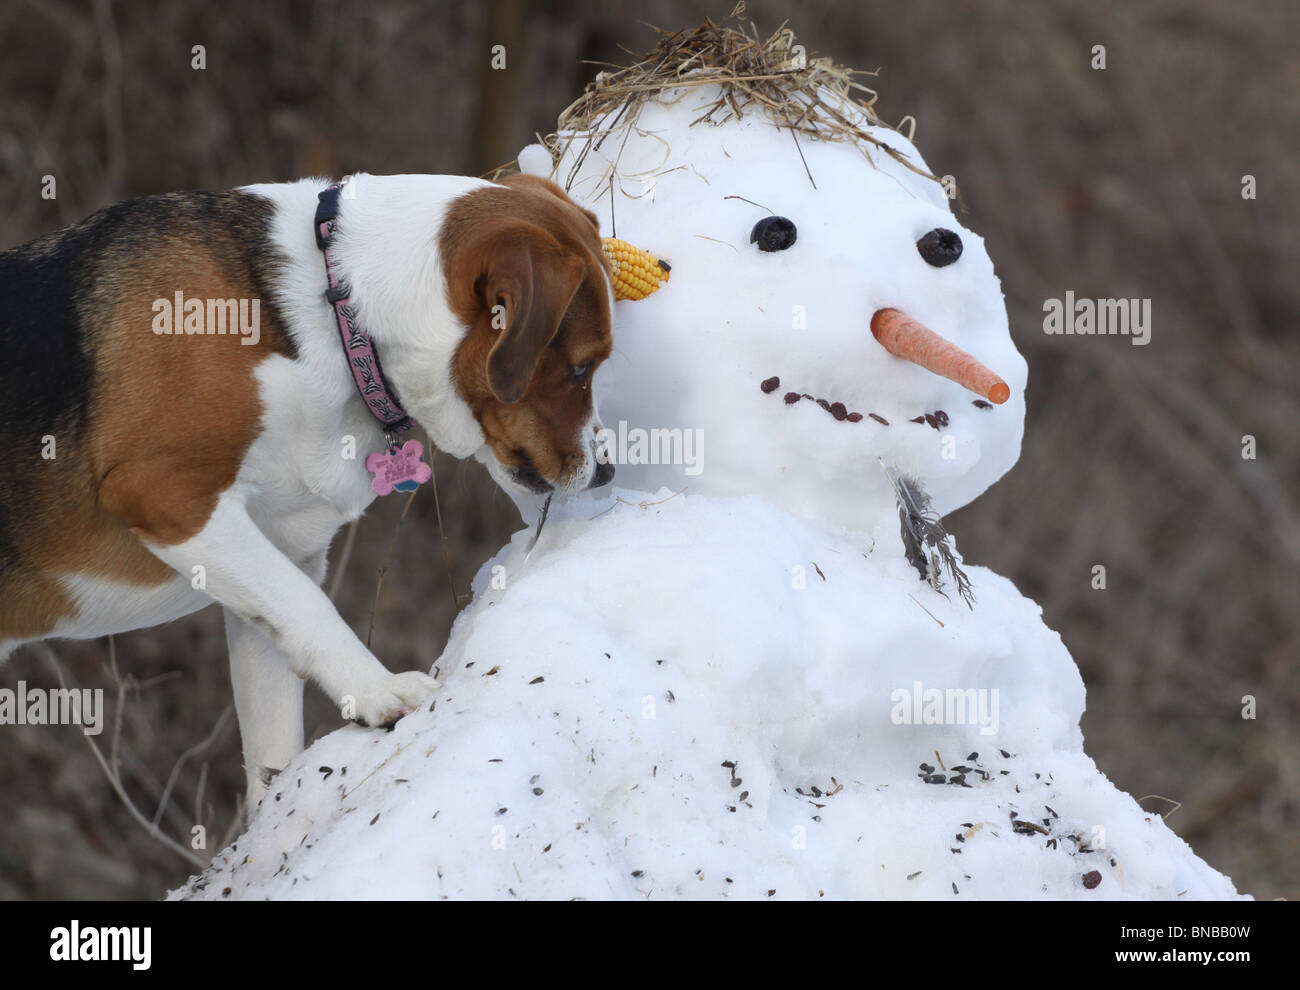 dog beagle on snow man snowman pet winter play Stock Photo